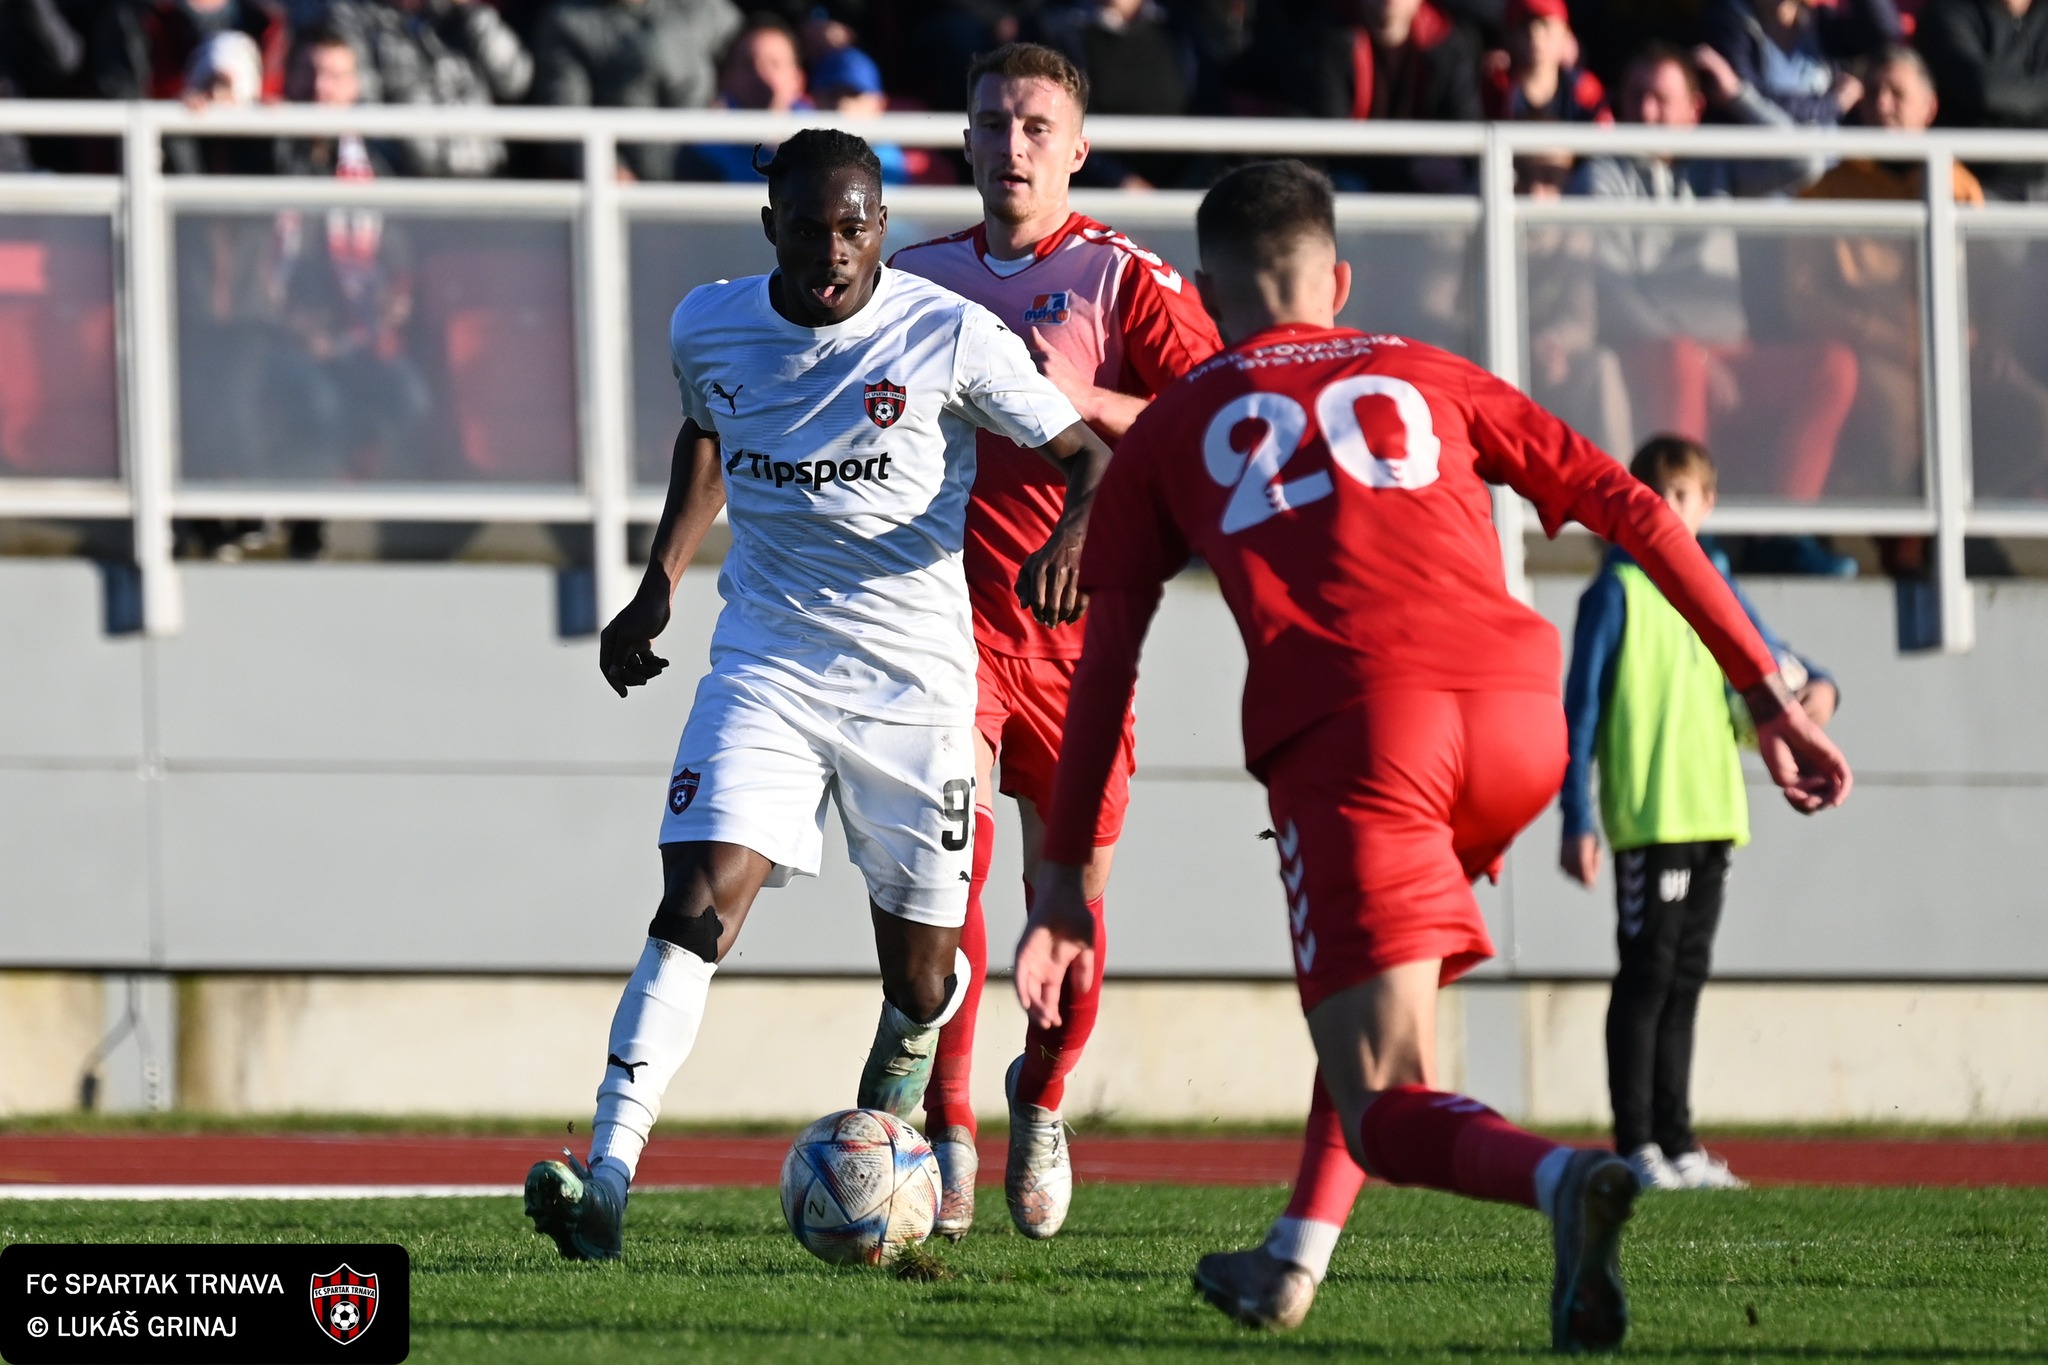 Ghana’s Kelvin Ofori scores for FC Spartak Trnava against Povazska Bystrica